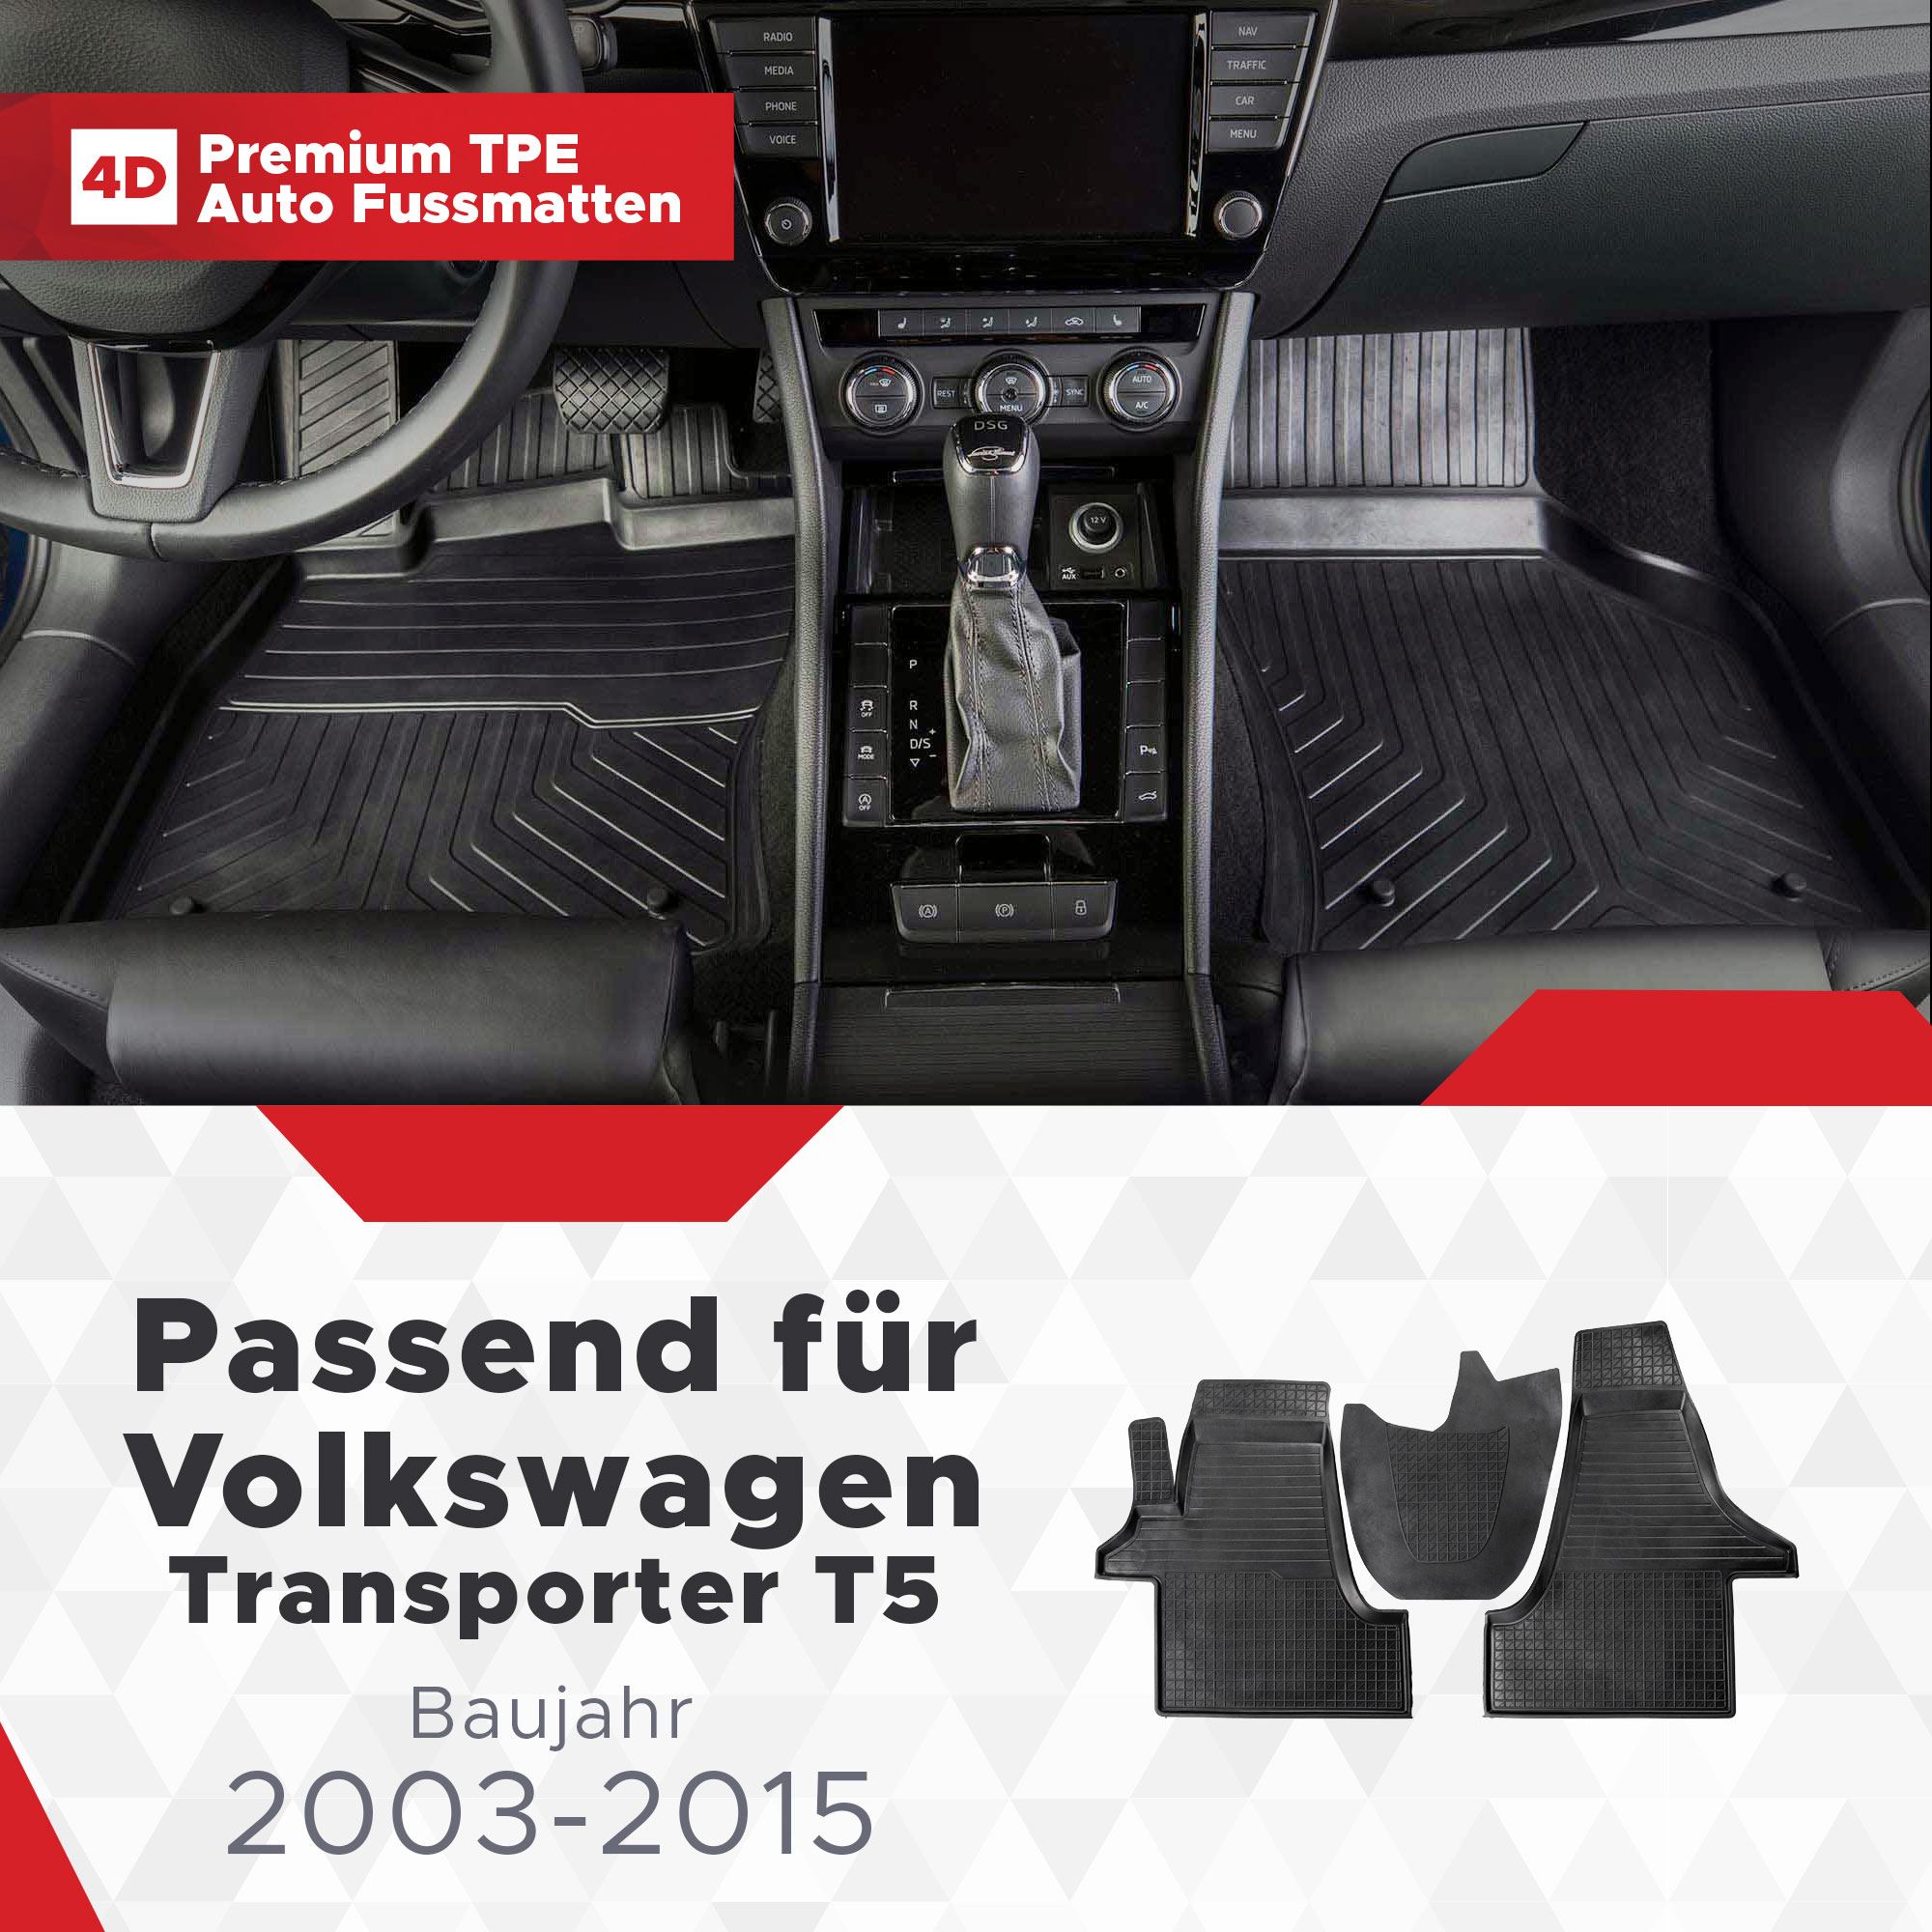 4D Volkswagen Transporter T5 Fussmatten Bj 2003-2015 Gummimatten